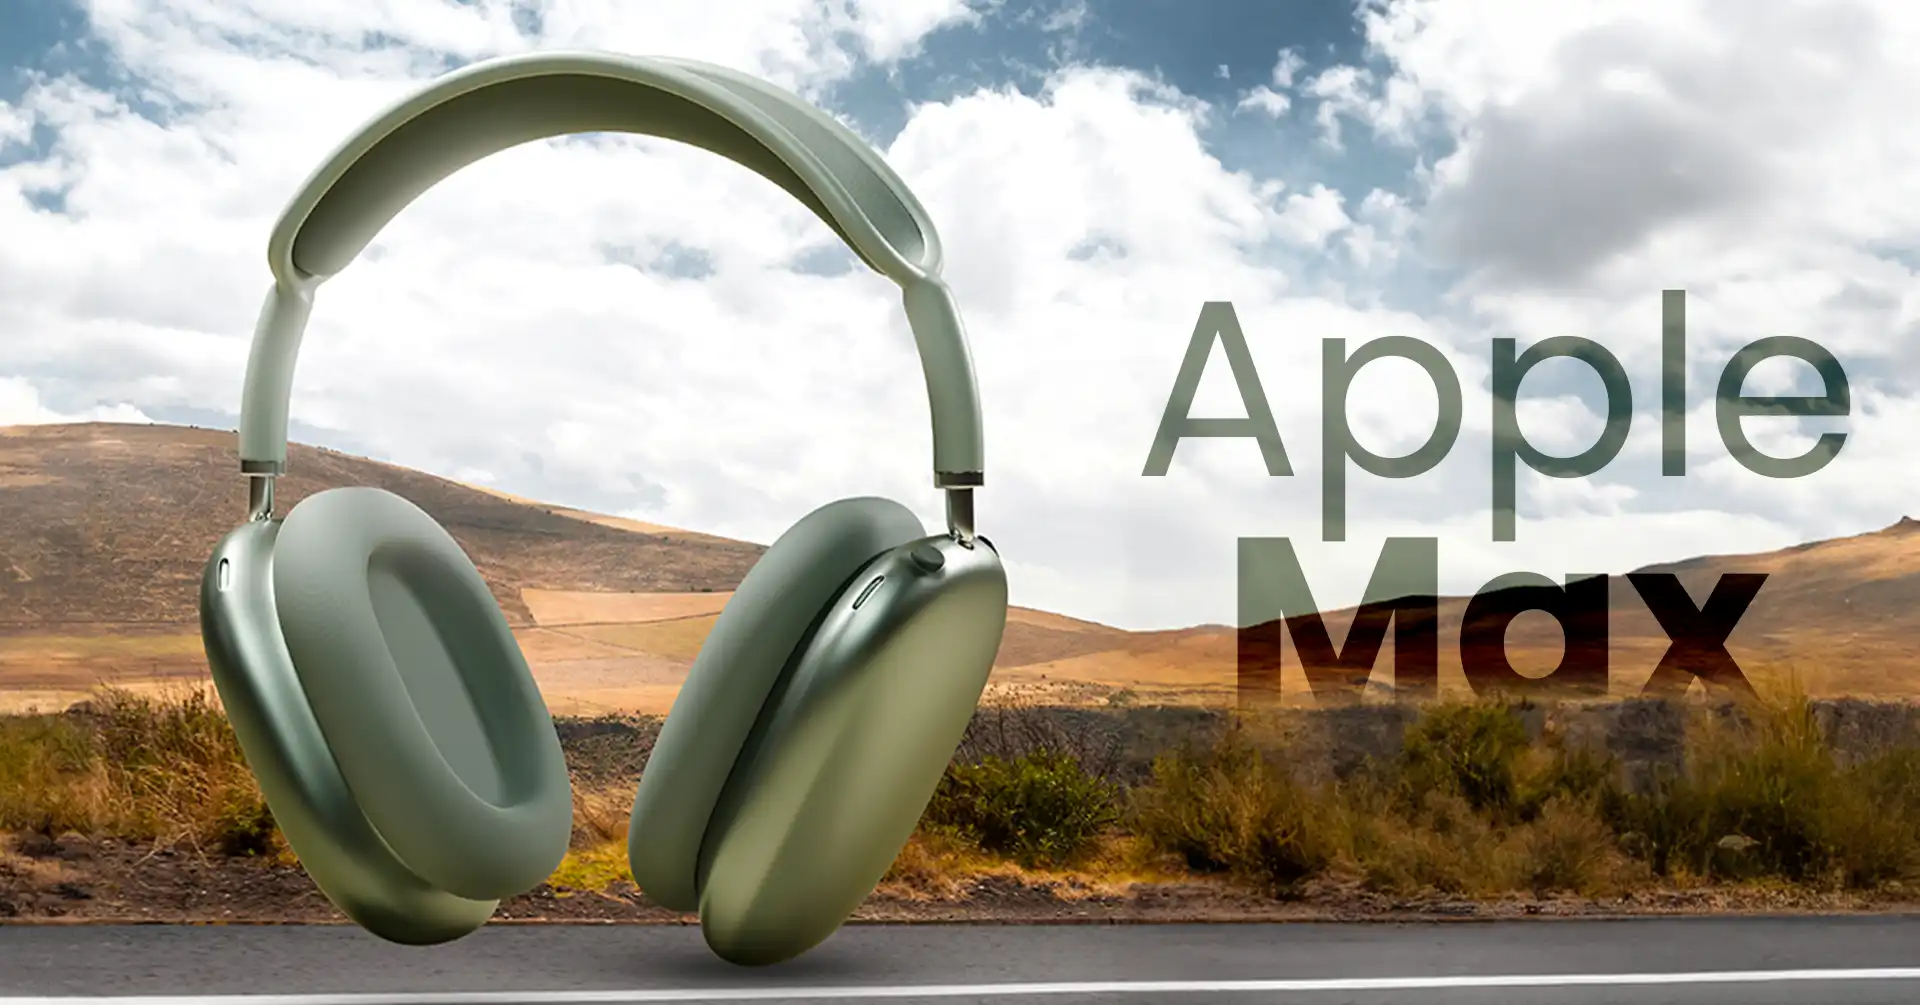 The Apple Max Headphones